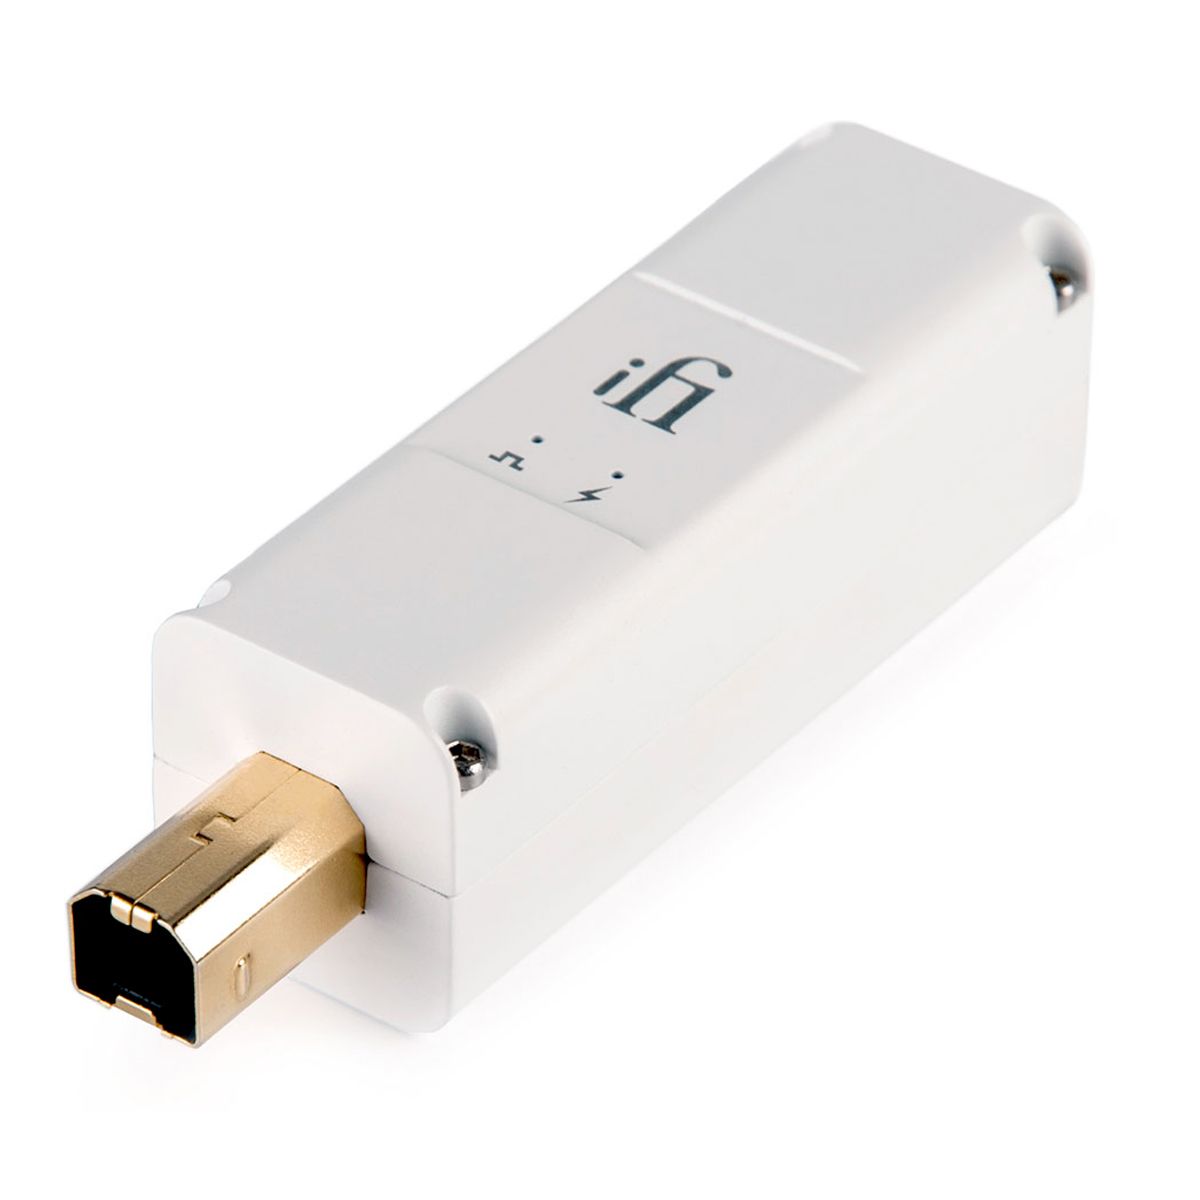 iFi Audio iPurifier3 USB Audio and Power Filter